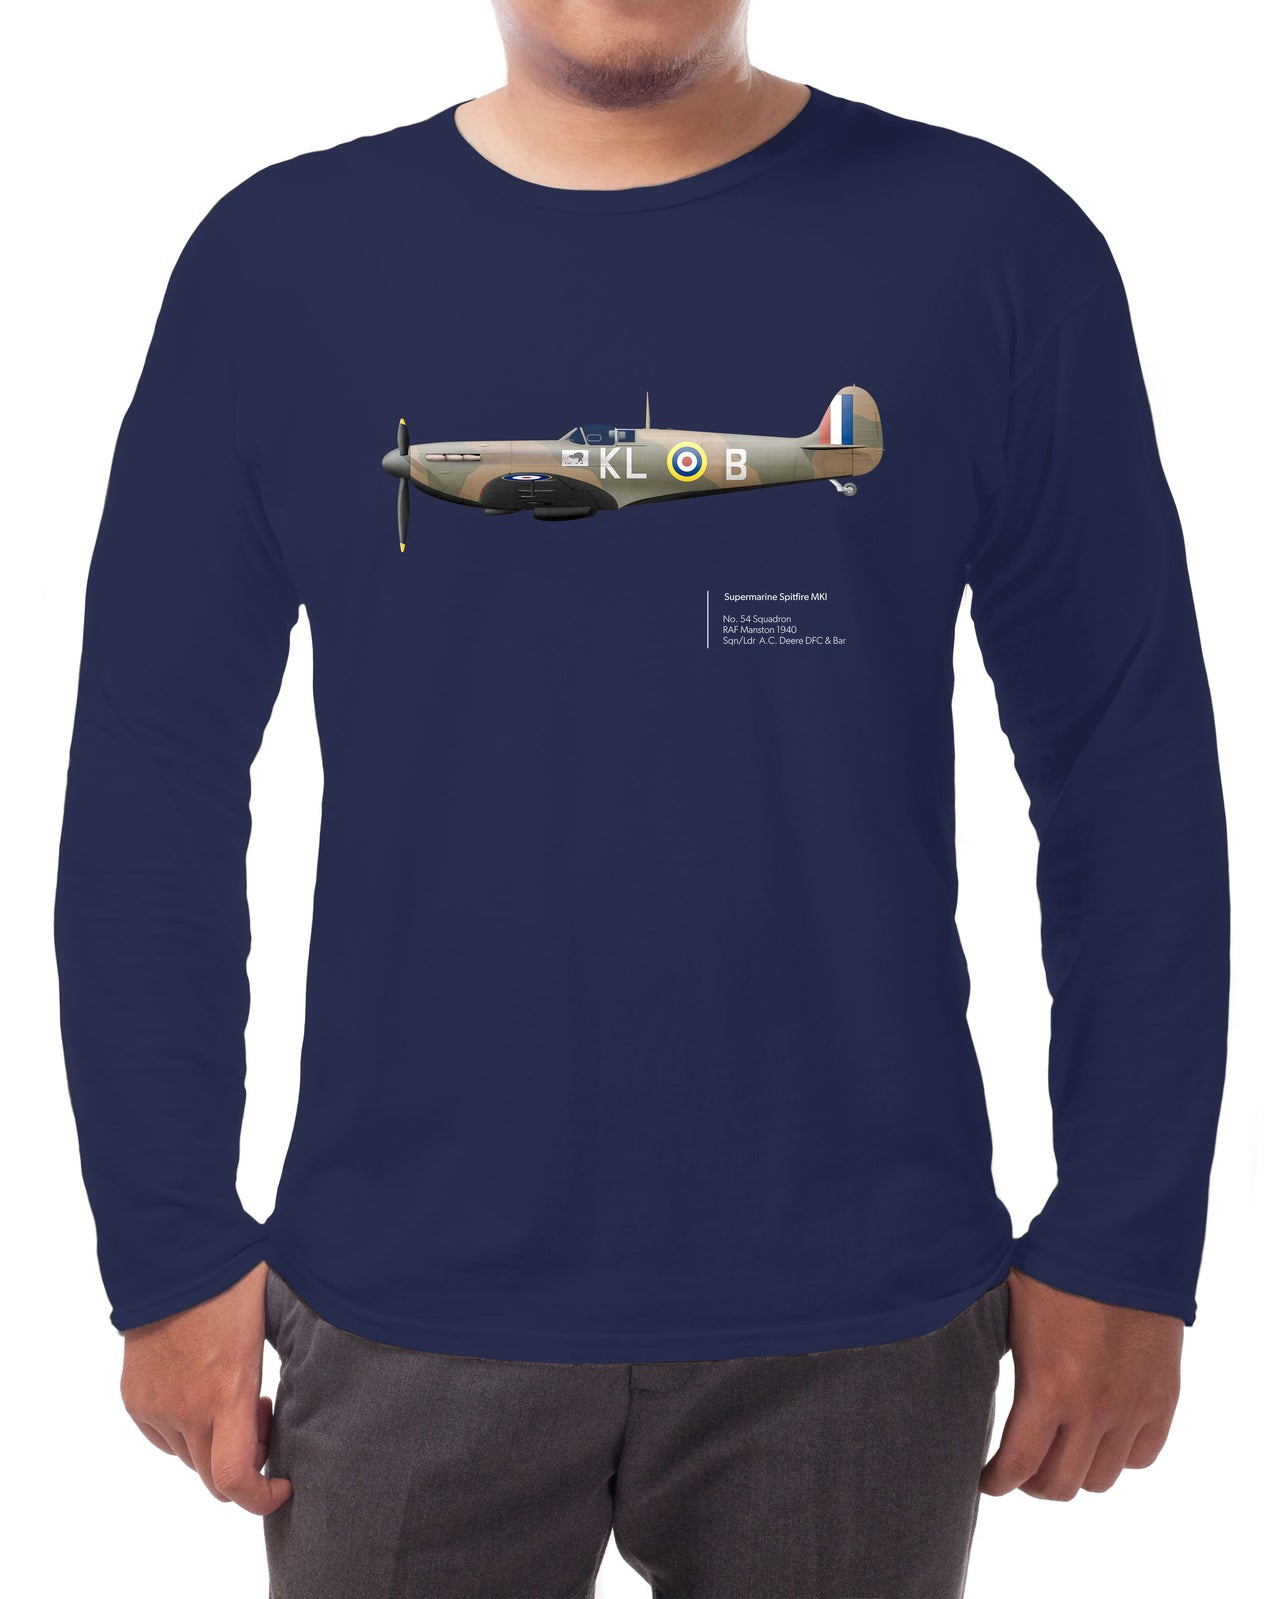 Spitfire 234SQN - Long-sleeve T-shirt